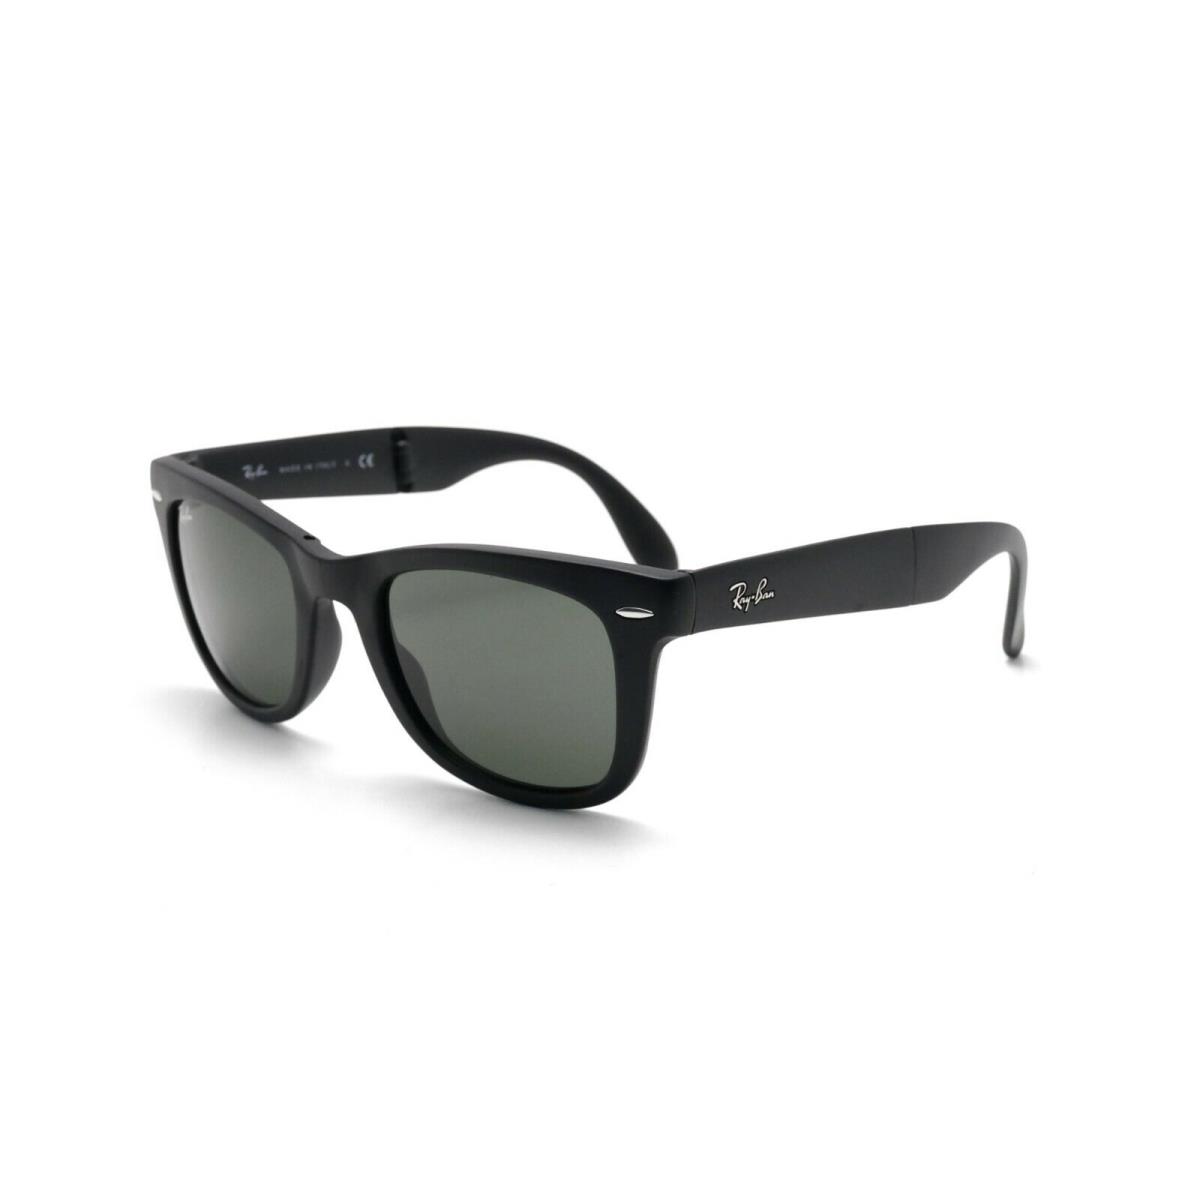 Ray-ban Wayfarer Folding Matte Black Frame Unisex Sunglasses RB4105 601S-50